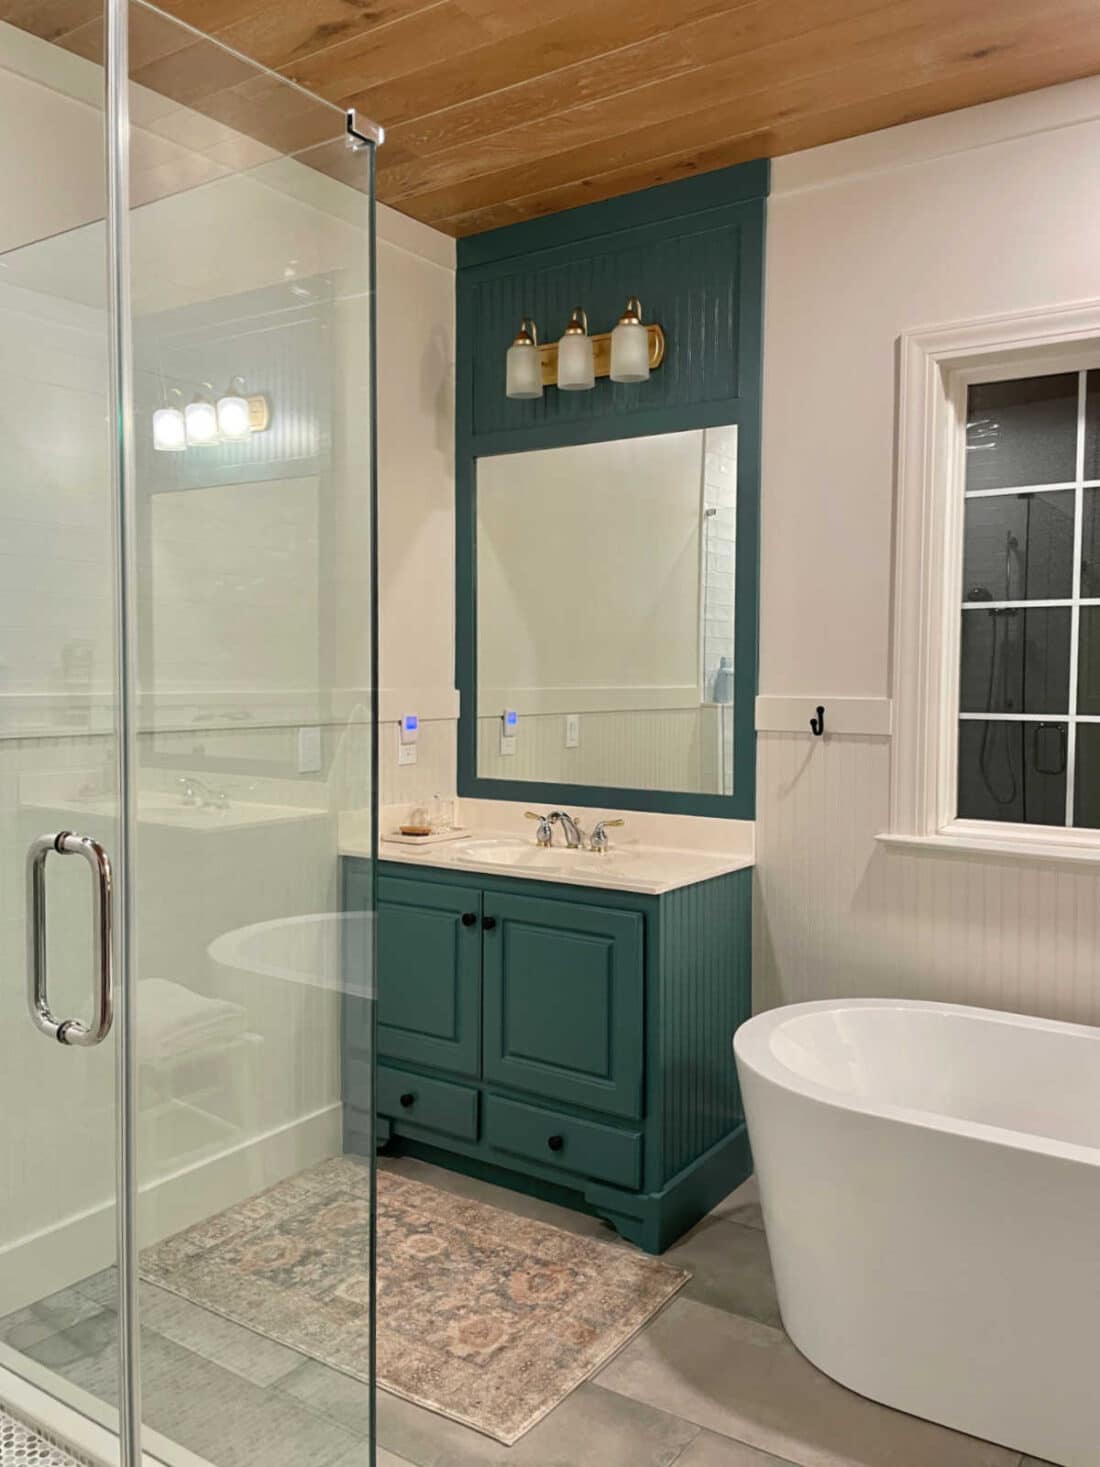 shower and vanity view in bathroom remodel